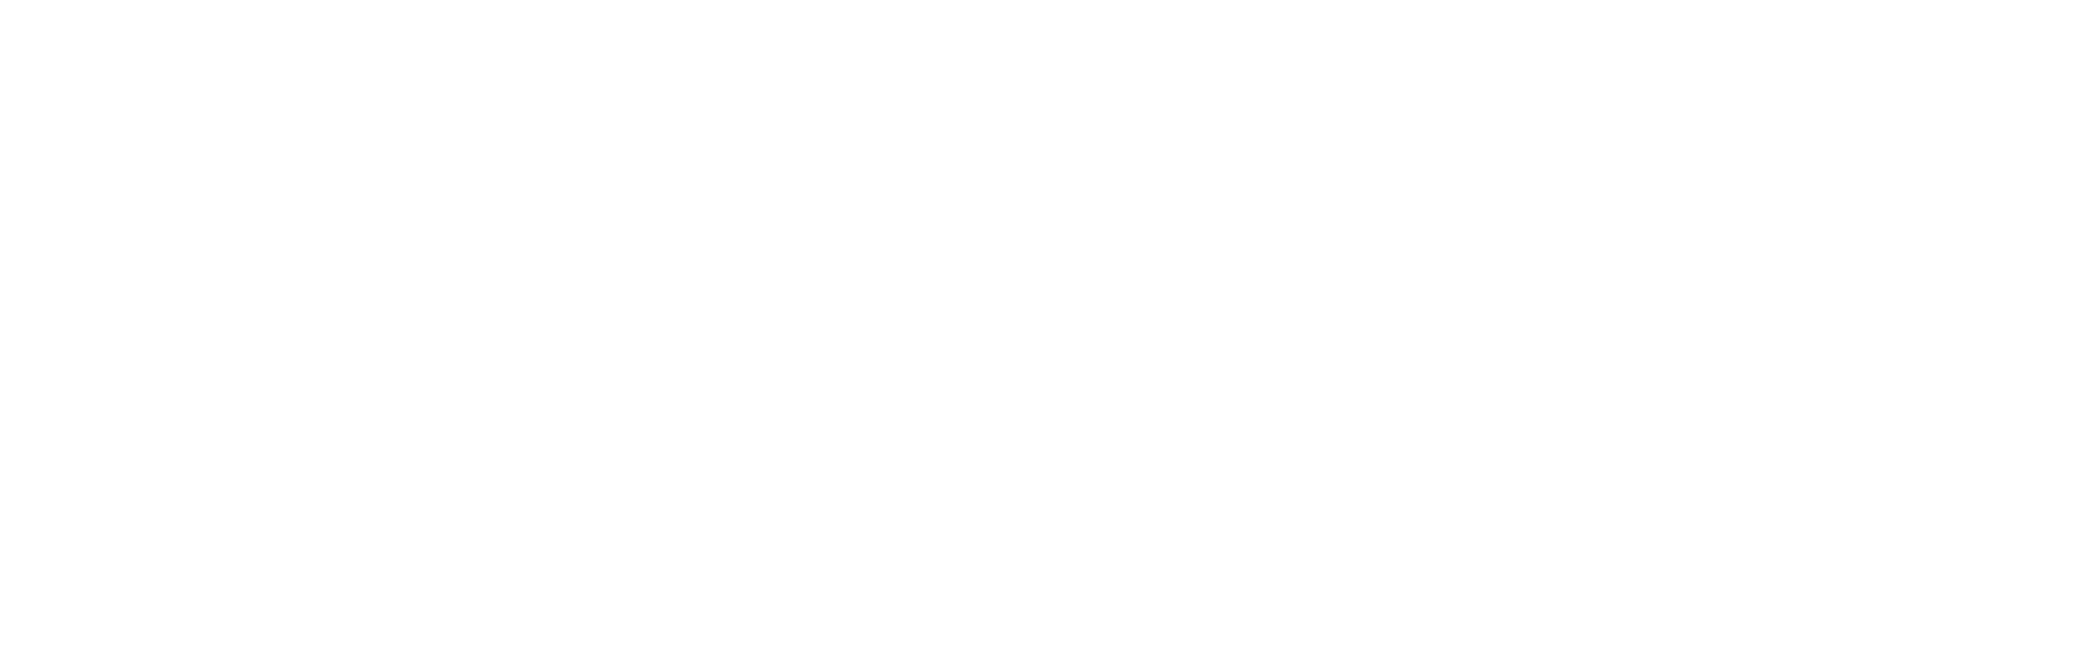 StudentVIP white logo